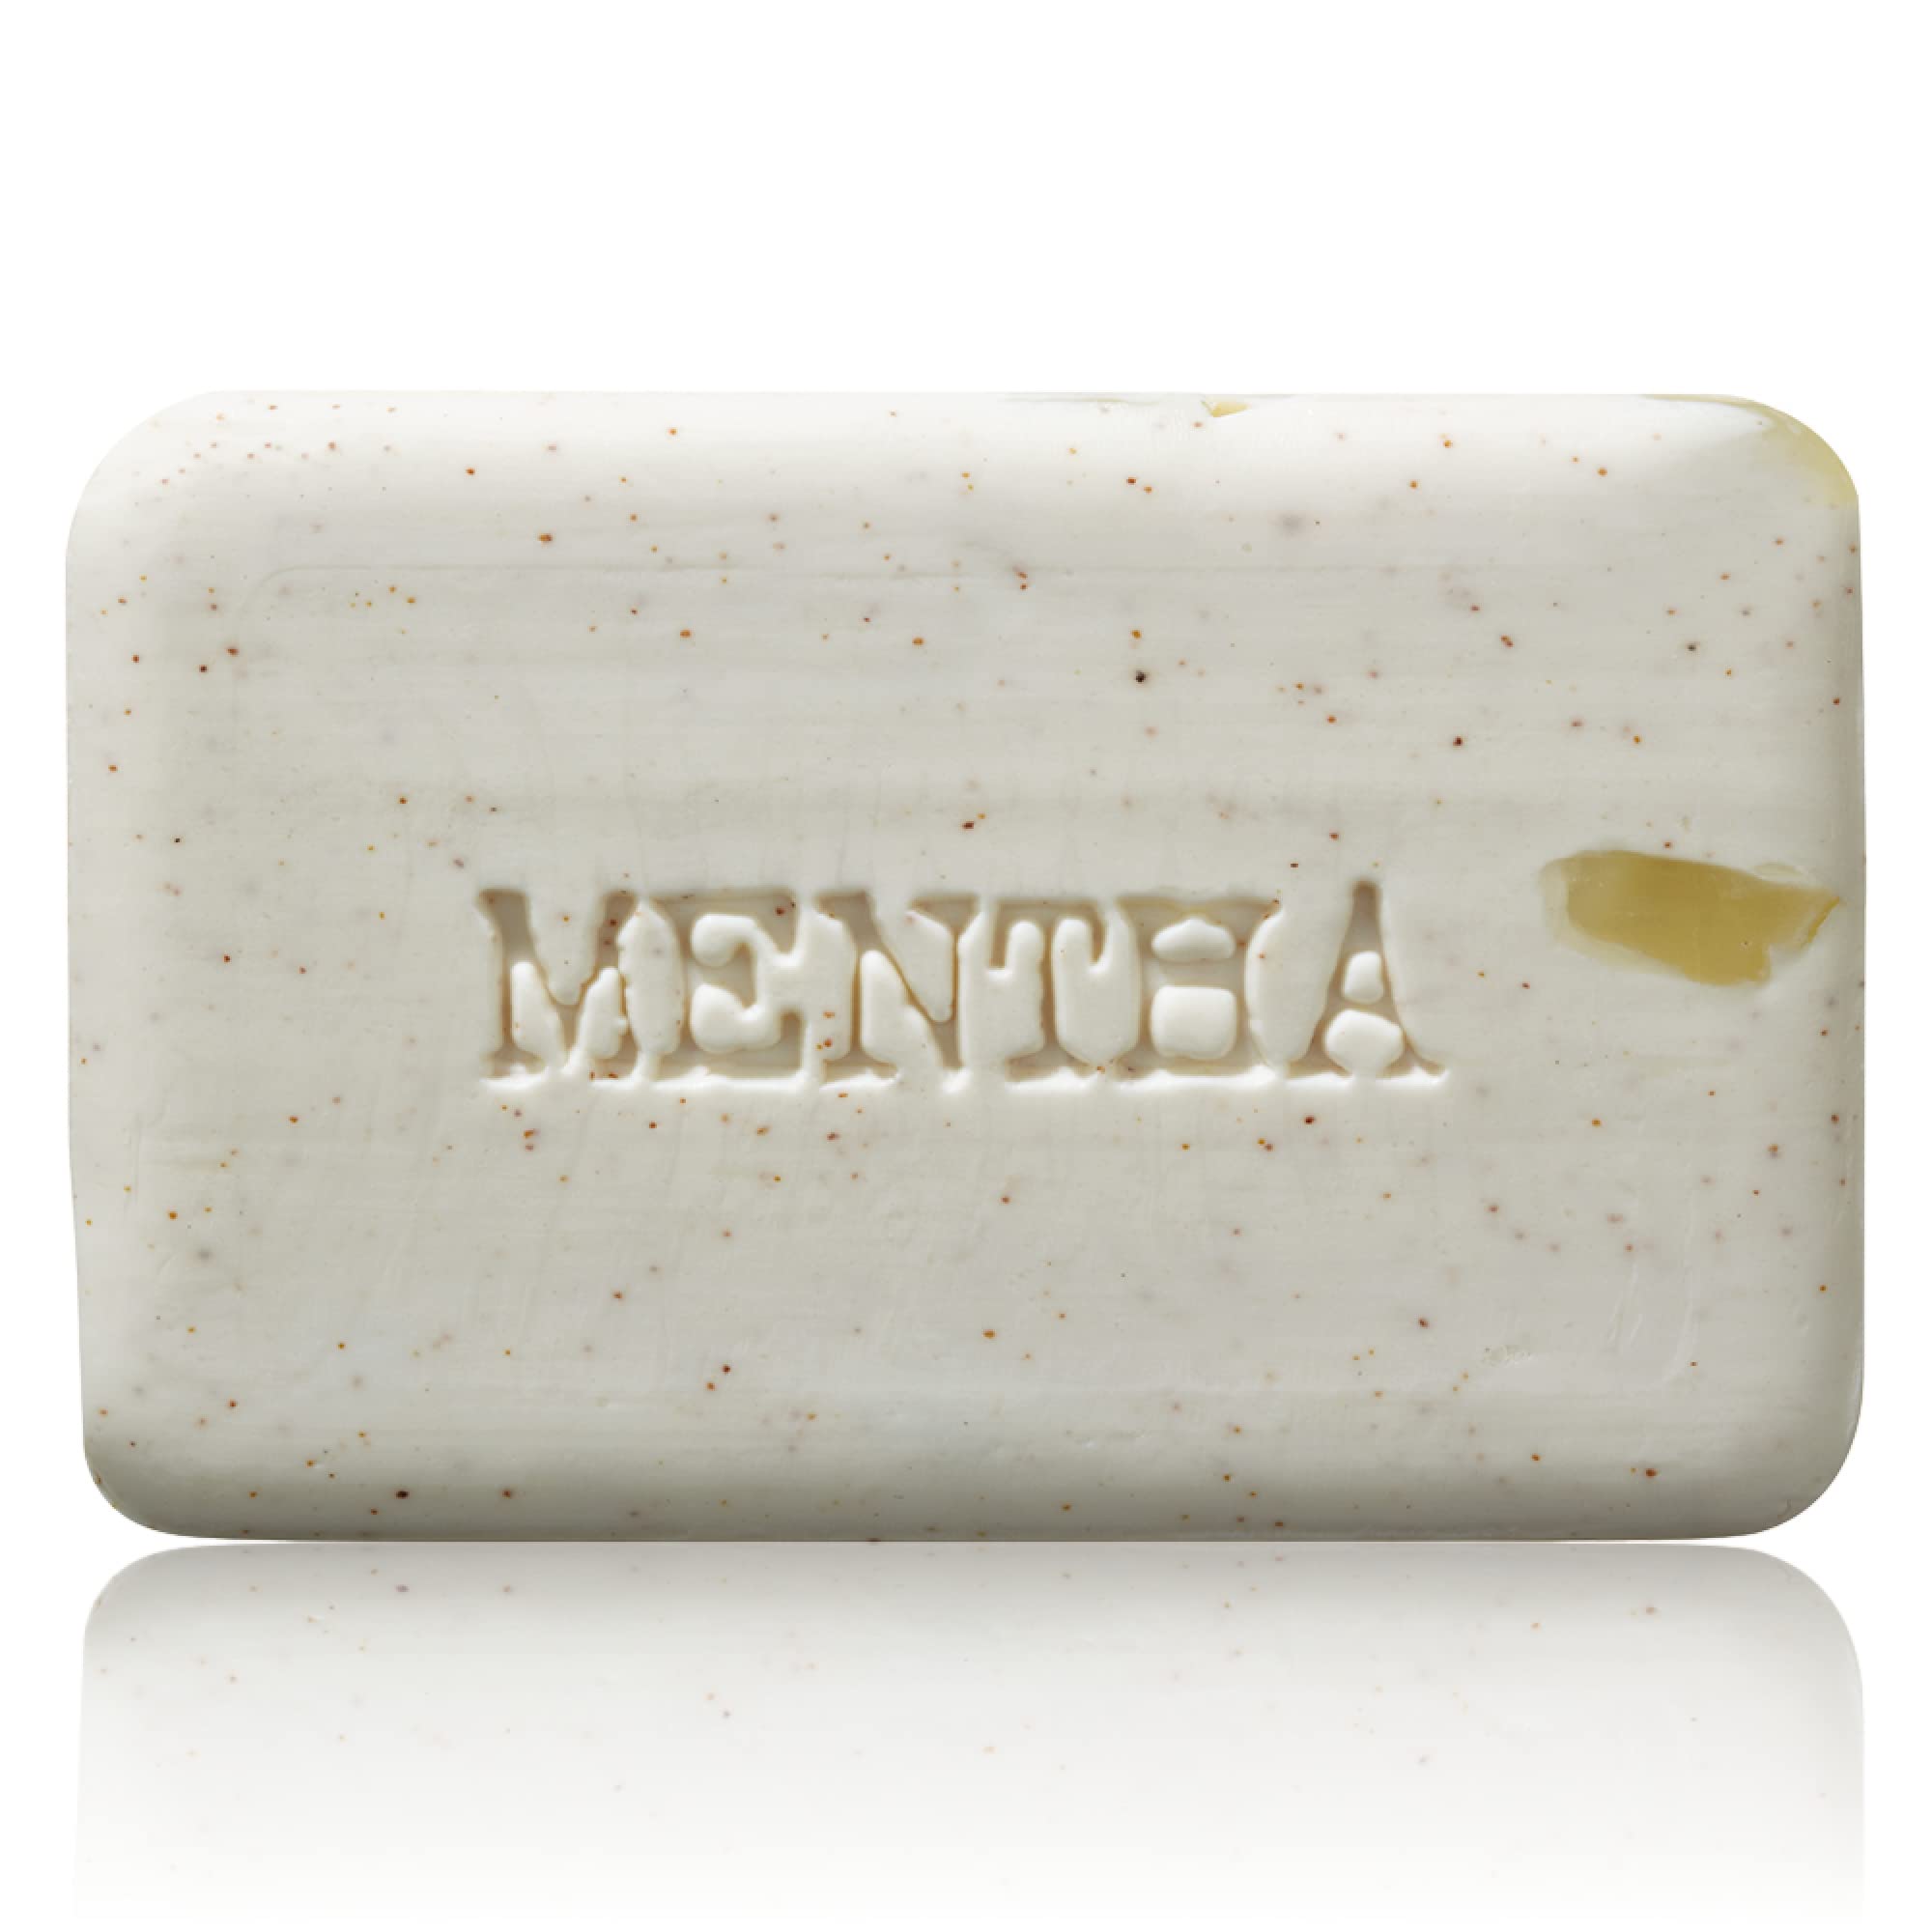 C.O. Bigelow Mentha Exfoliating Bar Soap, No. 1413, 7 oz, Exfoliating Body Scrub Soap with Peppermint Oil & Walnut Powder to Gently Cleanse and Smooth Dry, Rough Skin